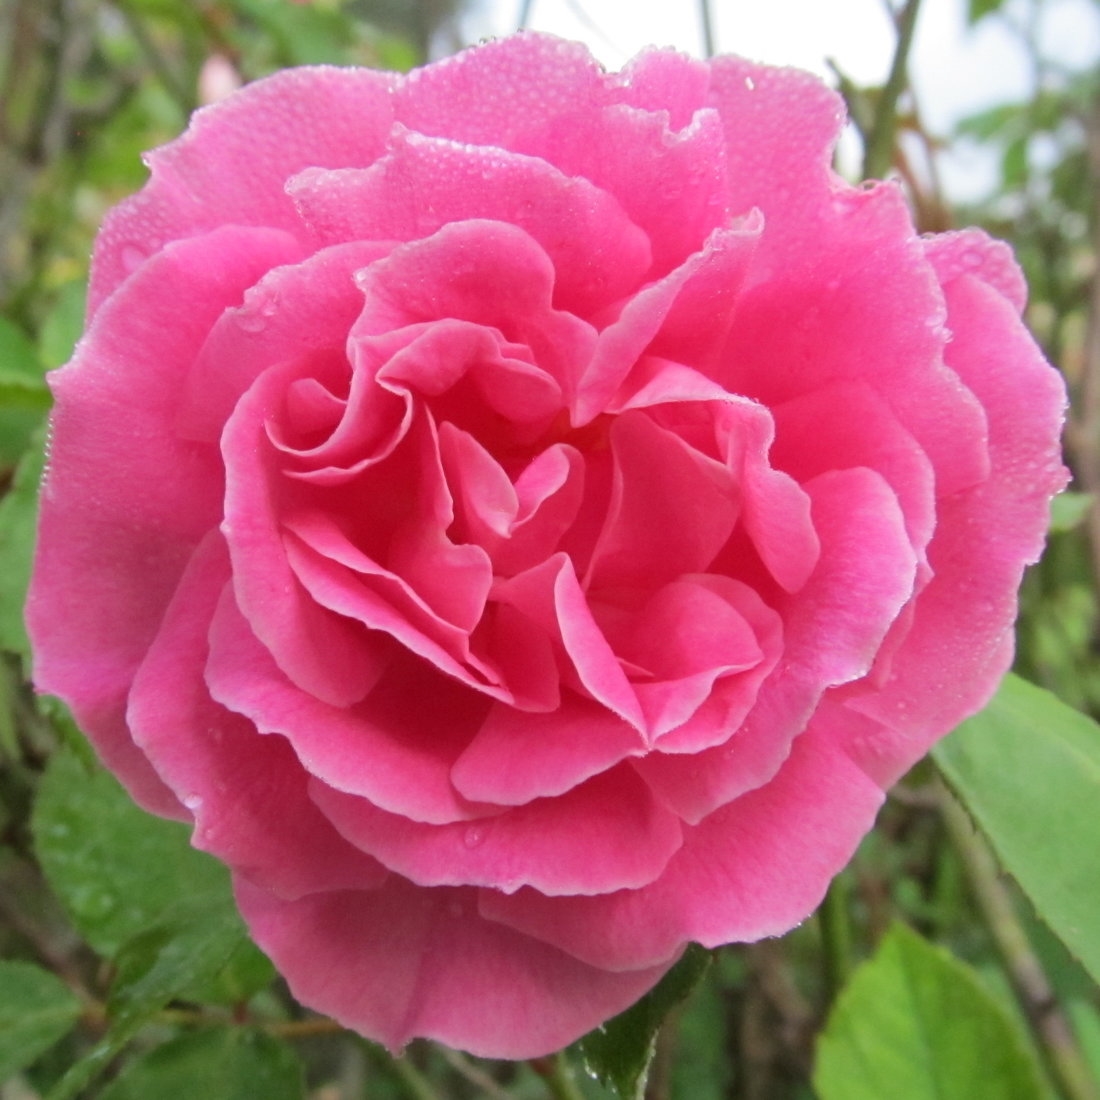 Medium Pink Carnation rose plants